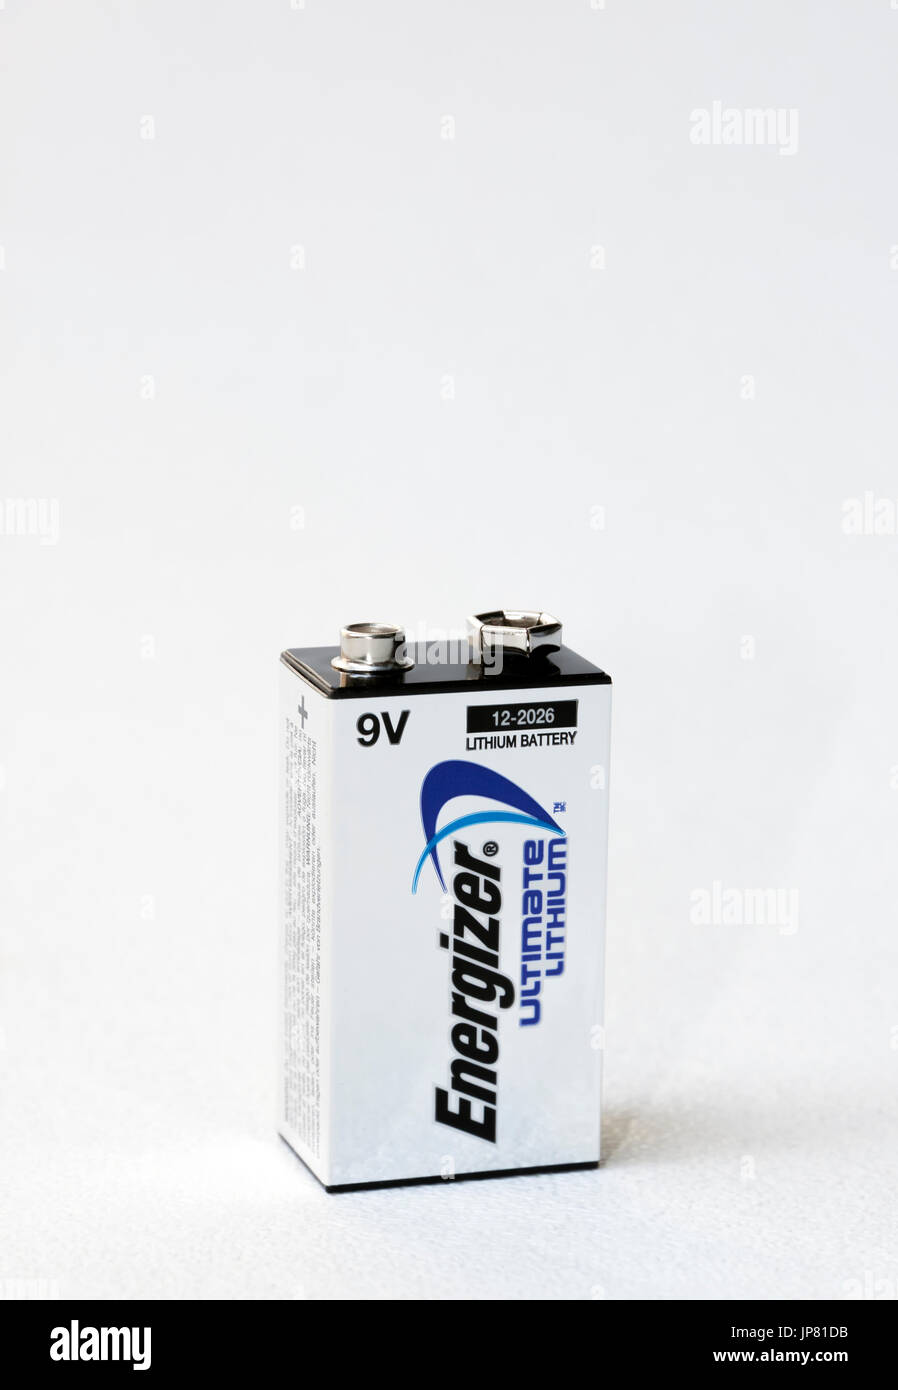 Lithium 9 volt battery used in smoke detectors, clocks, toys, cameras, audio, music equipment, etc. Stock Photo